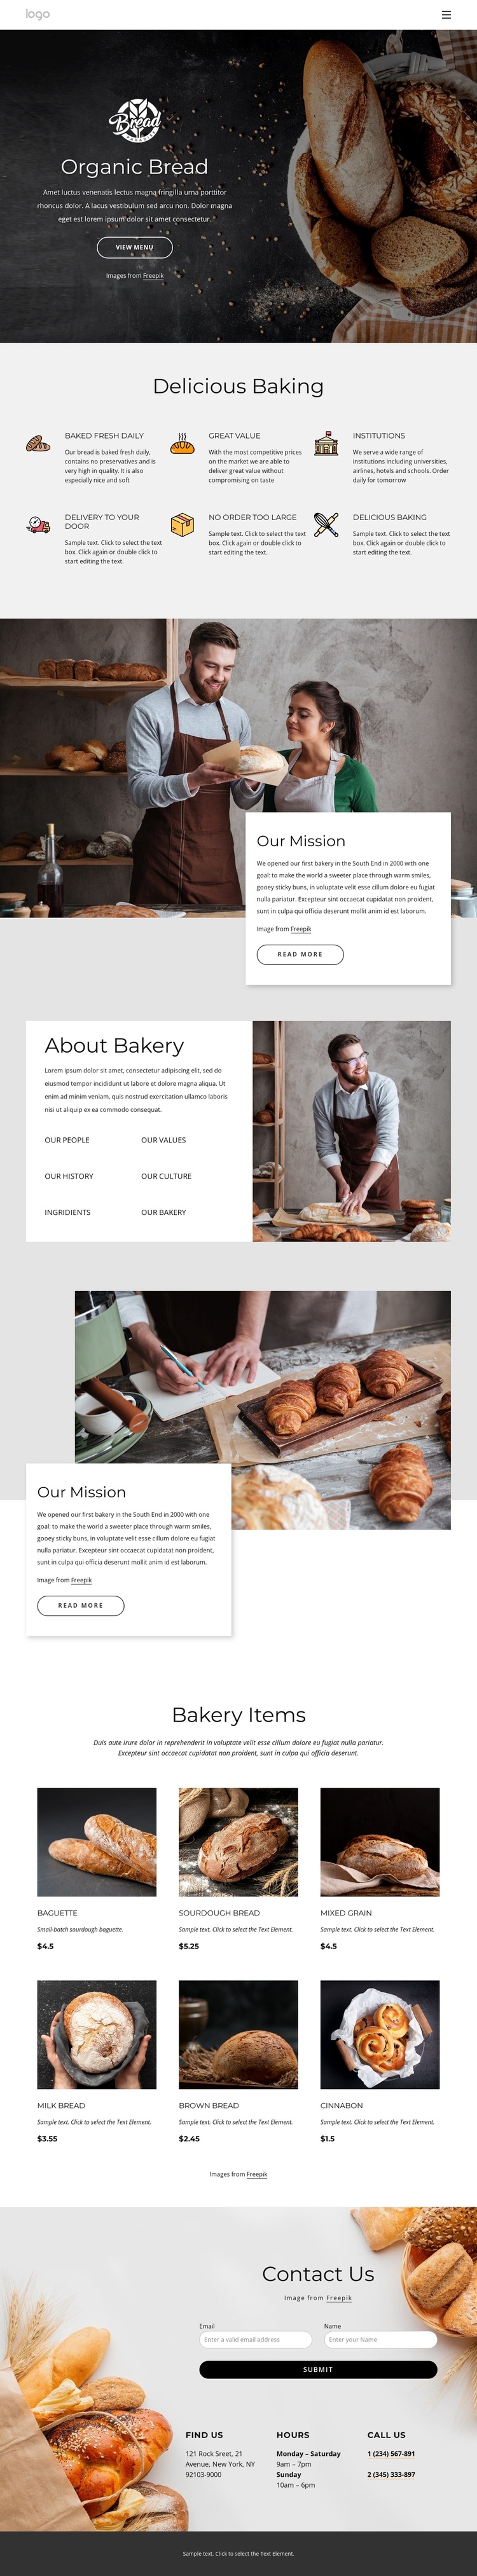 Bagels, buns, rolls, biscuits and loaf breads Website Builder Software